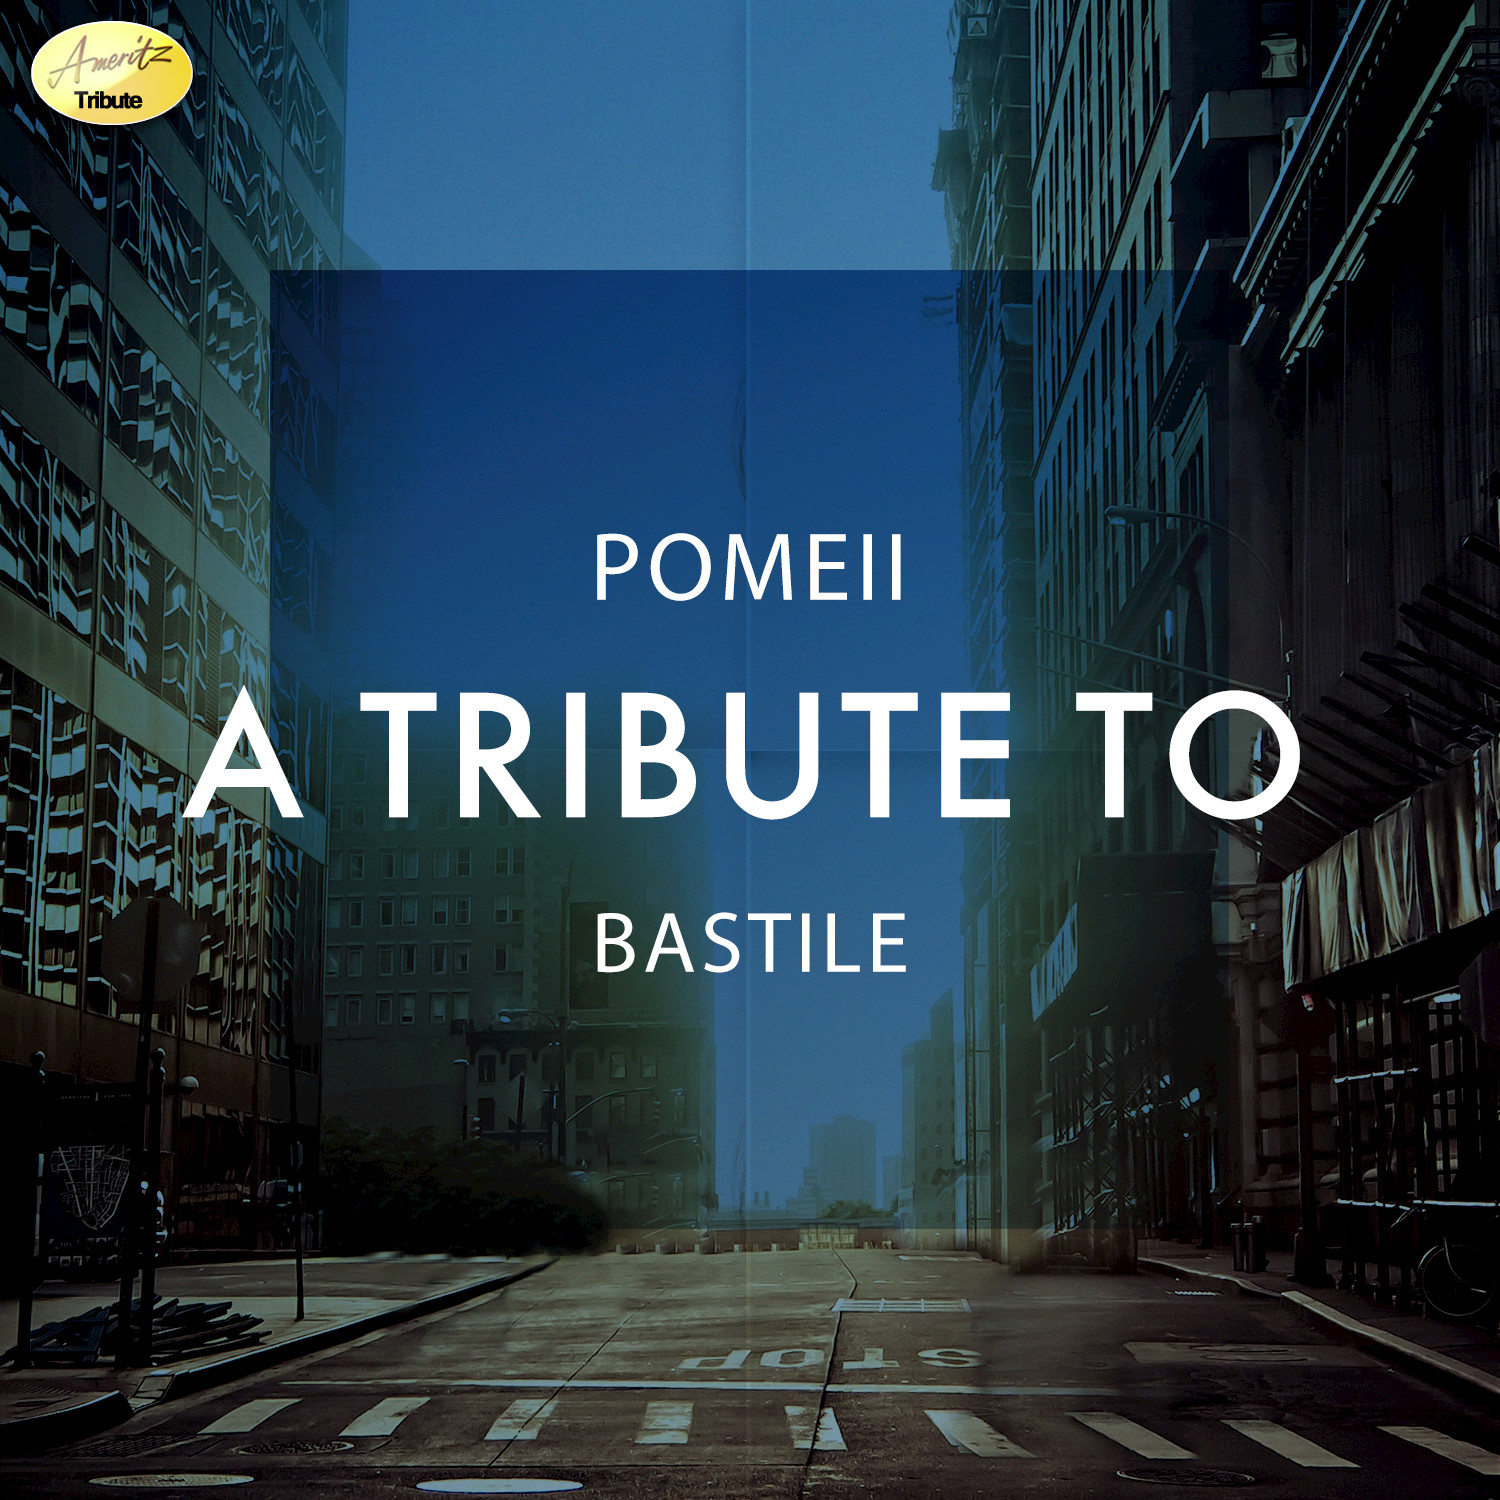 Pompeii - A Tribute to Bastile